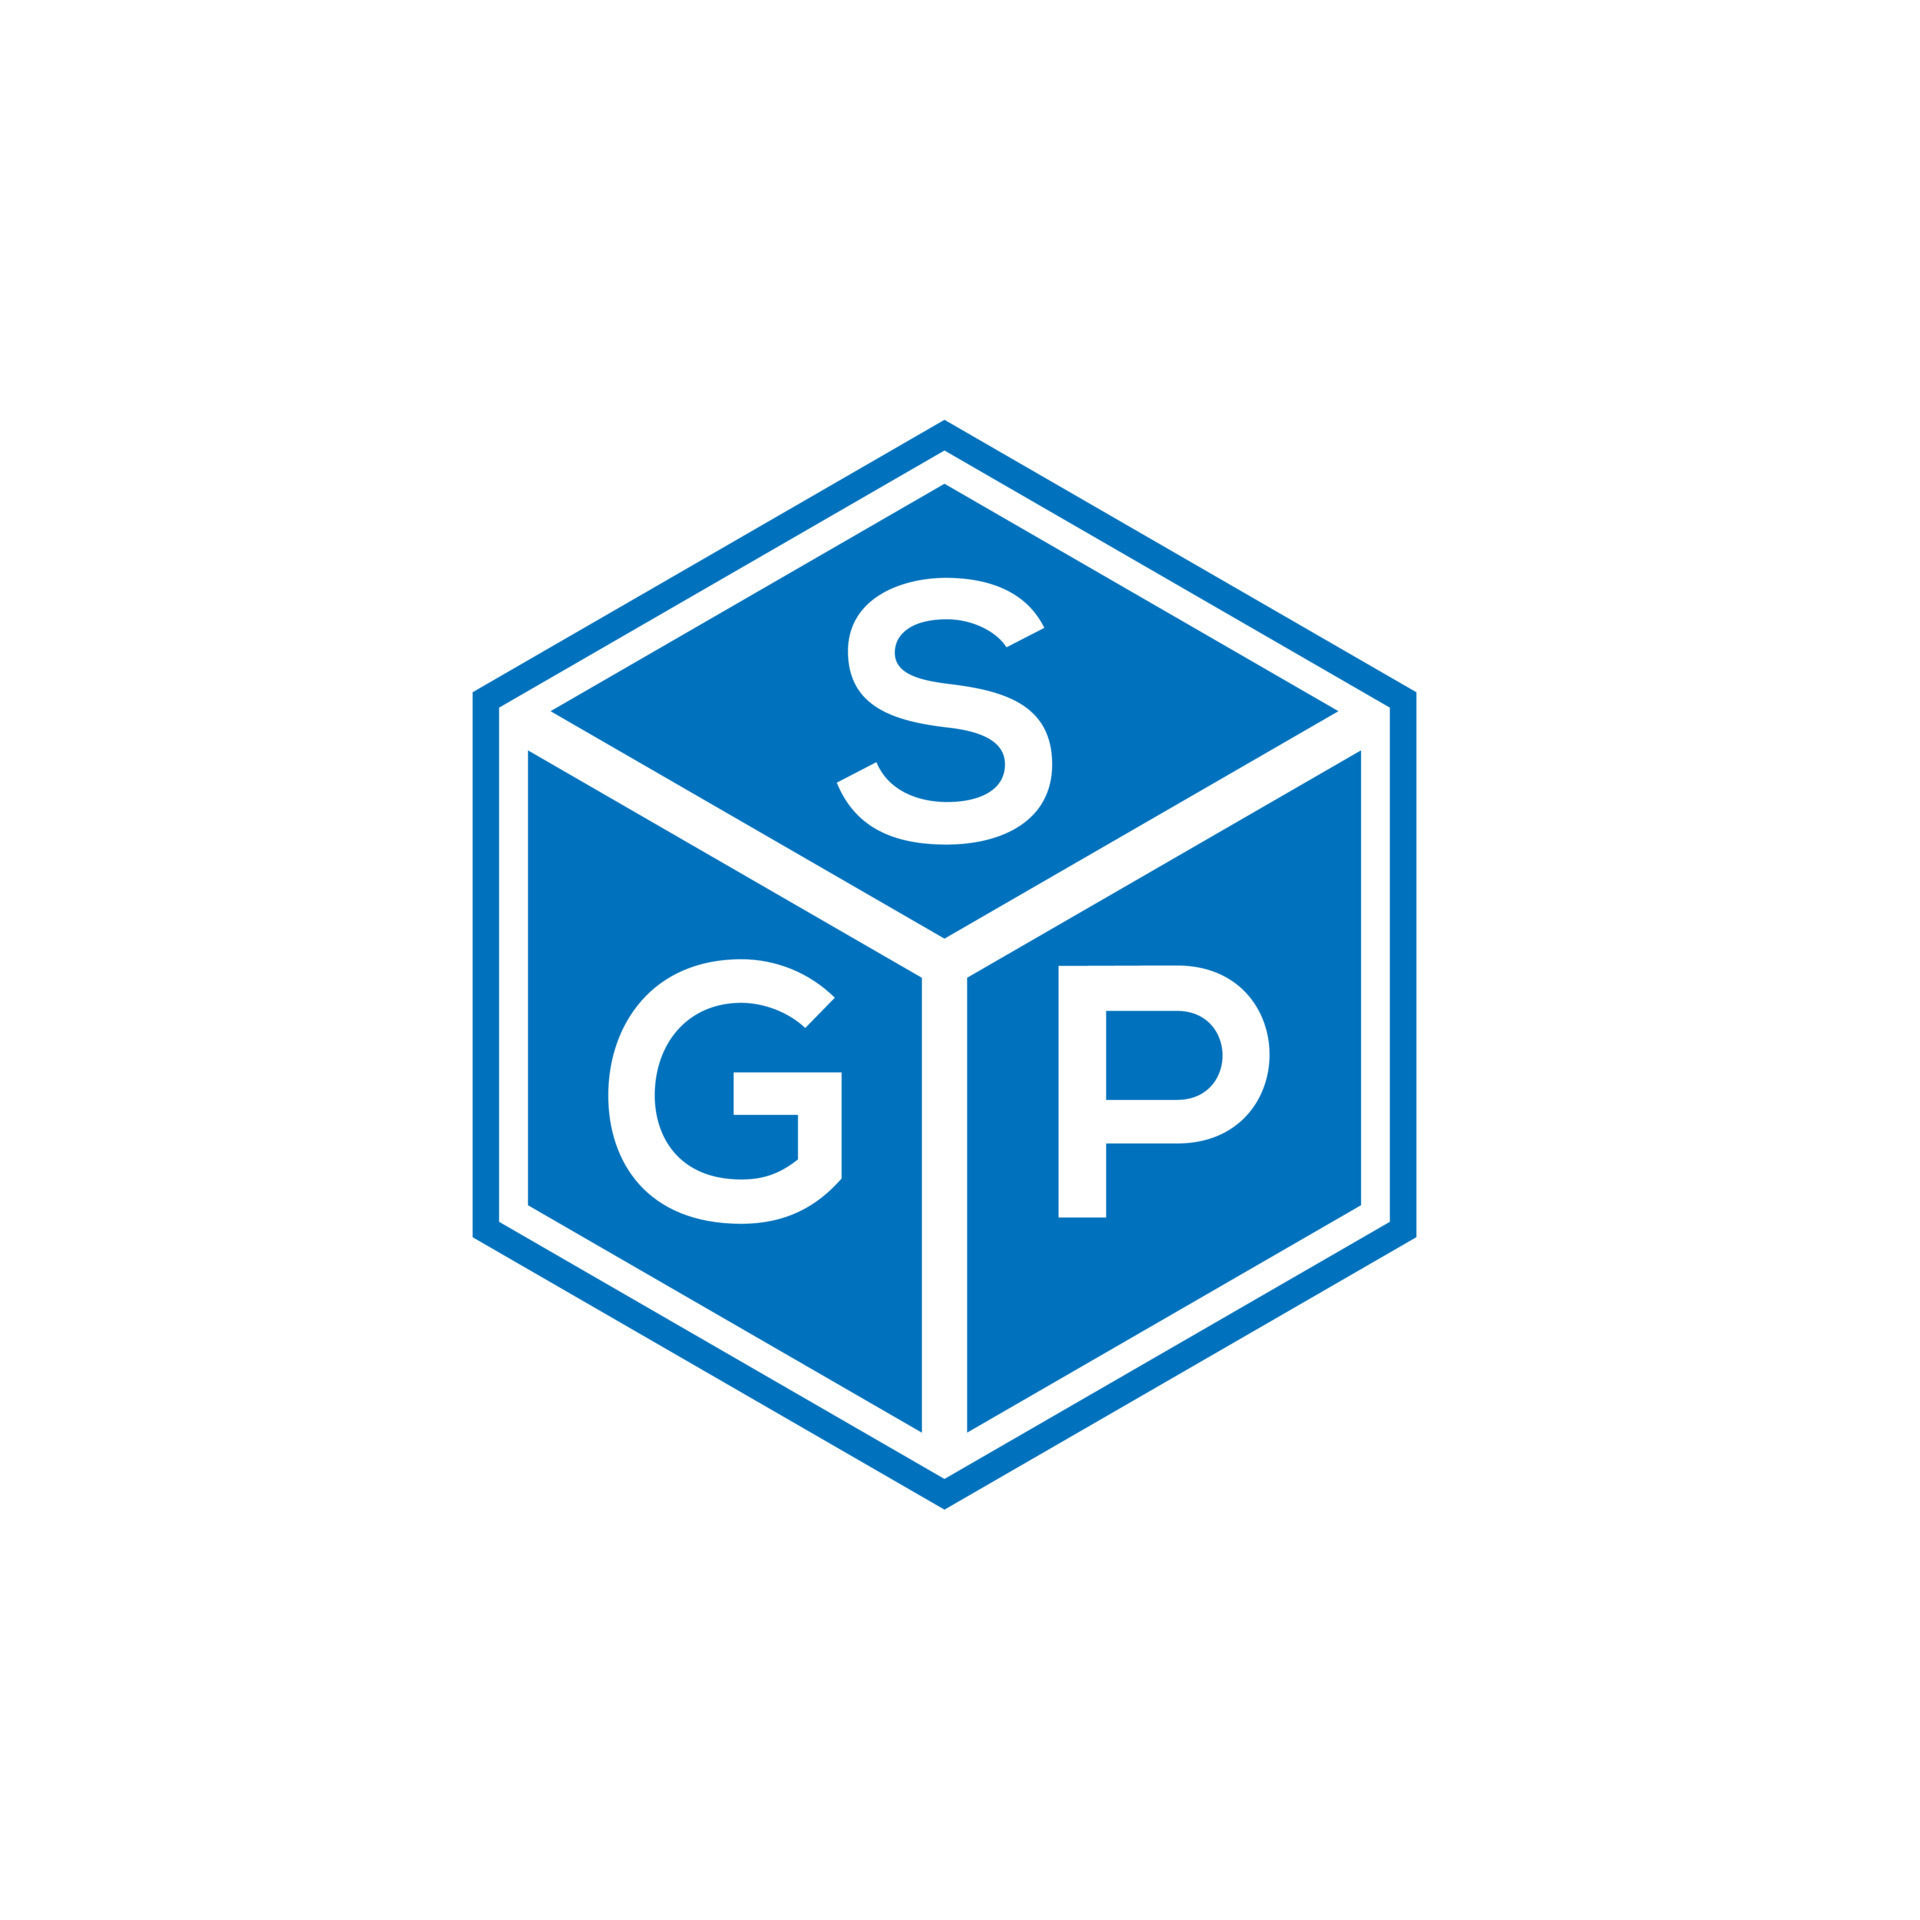 Premium Vector | Sgp,gps,psg letters abstract logo monogram